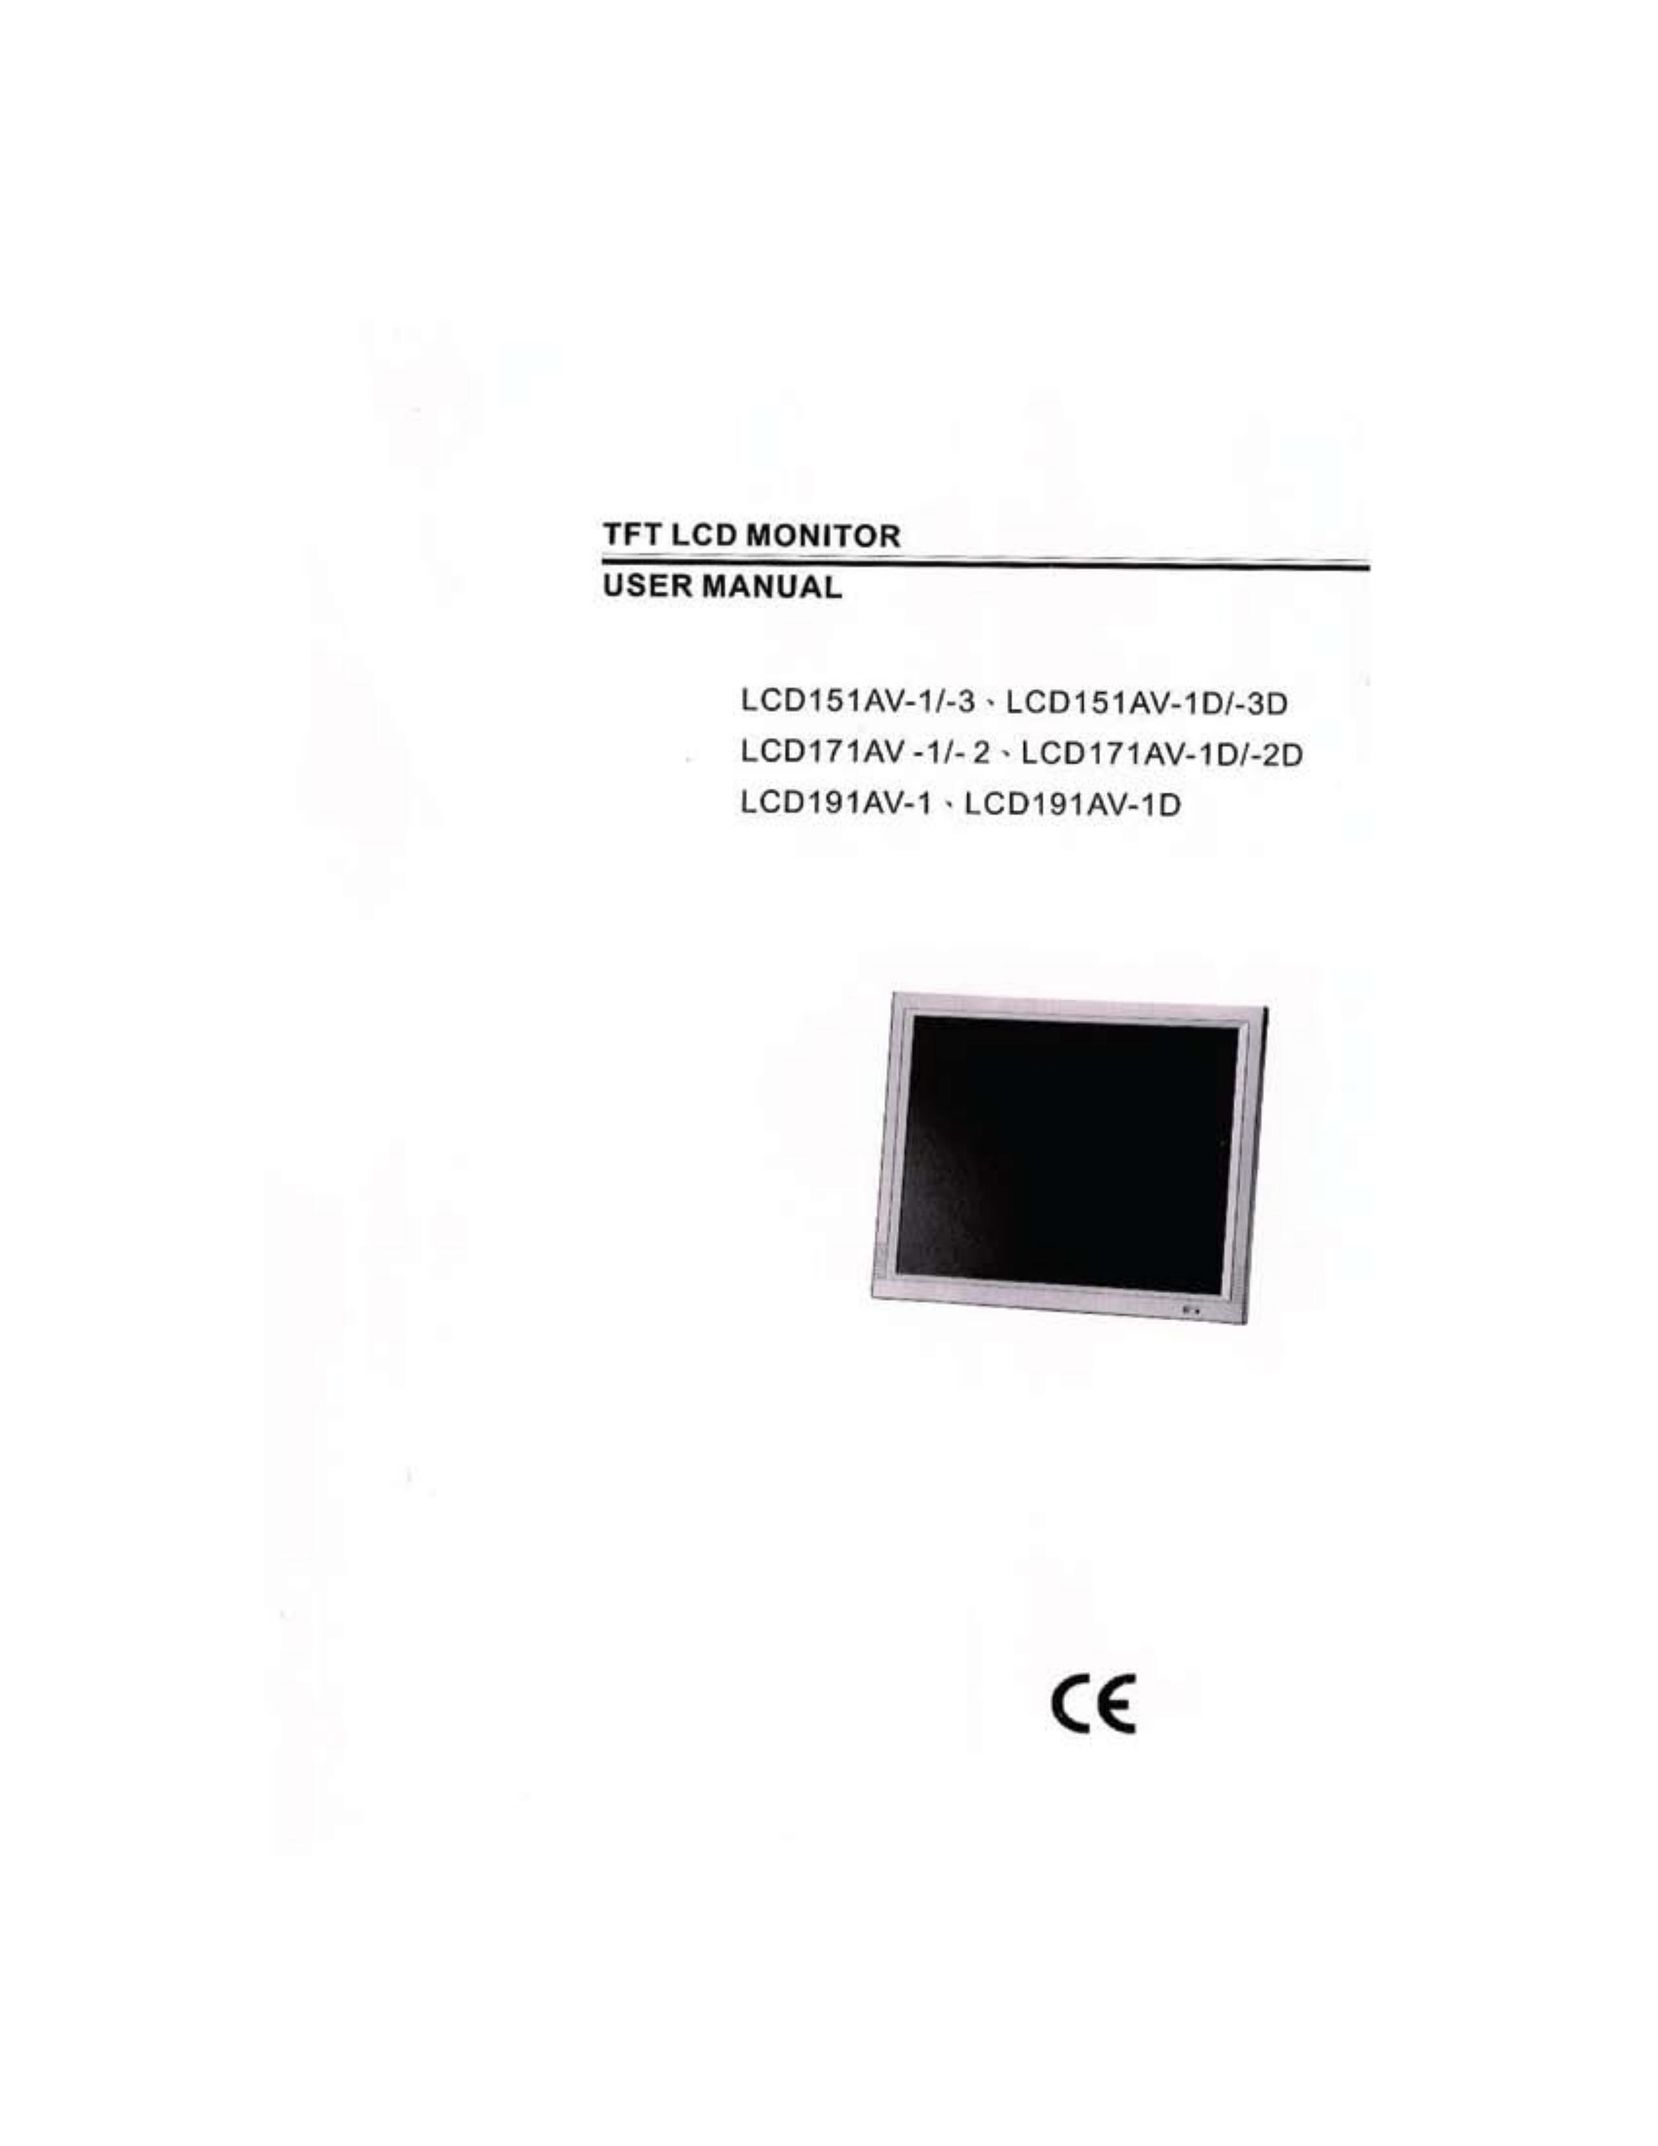 AVE LCD191AV-1D Computer Monitor User Manual